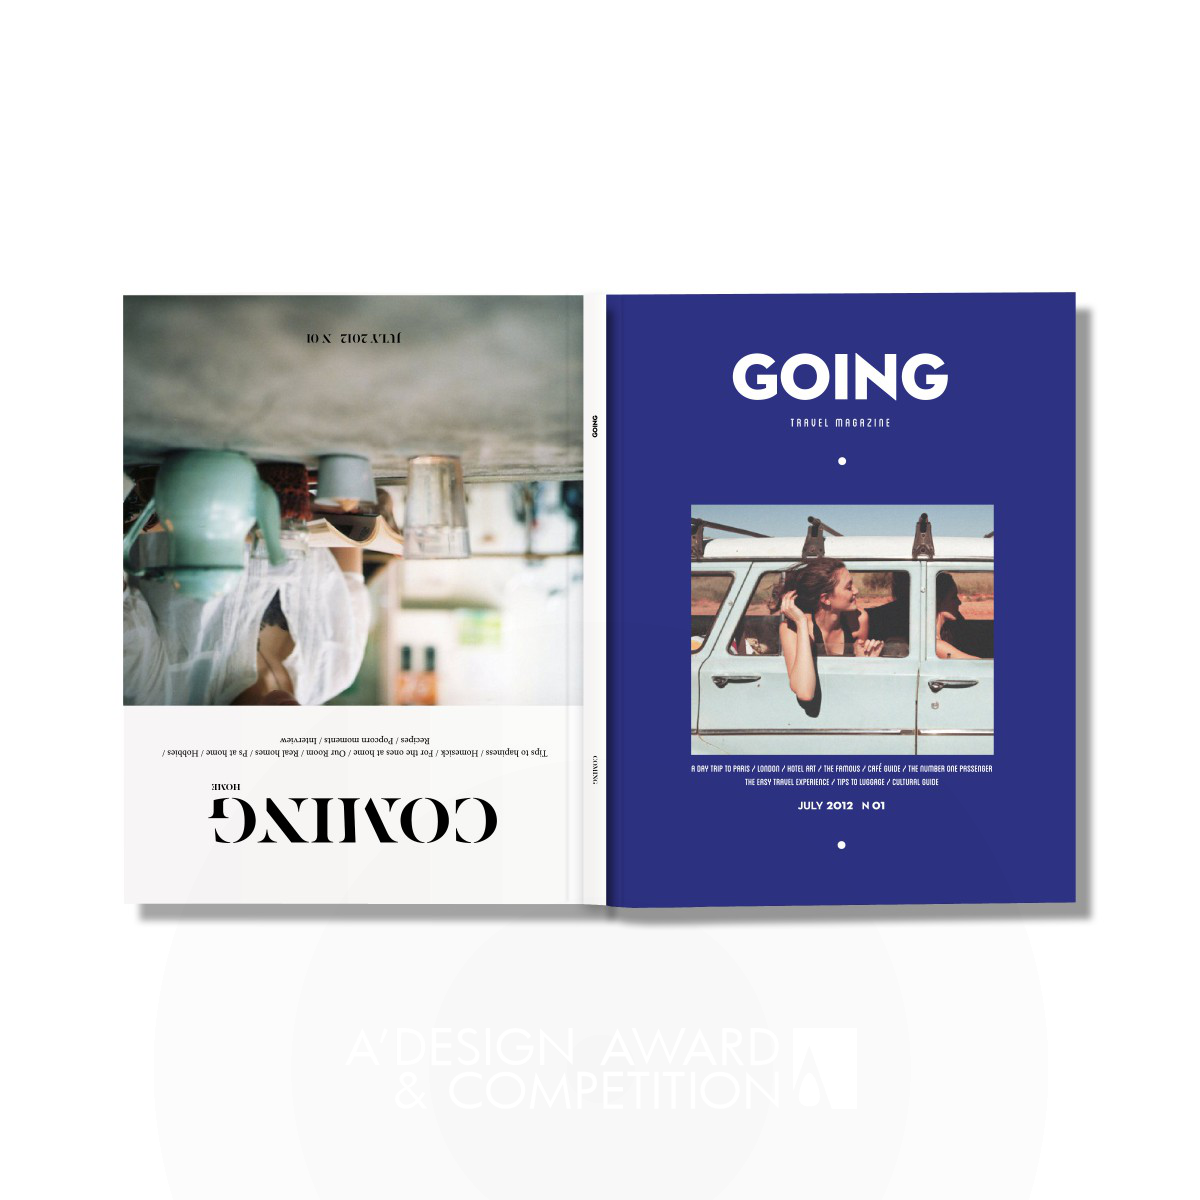 Going/Coming Magazine